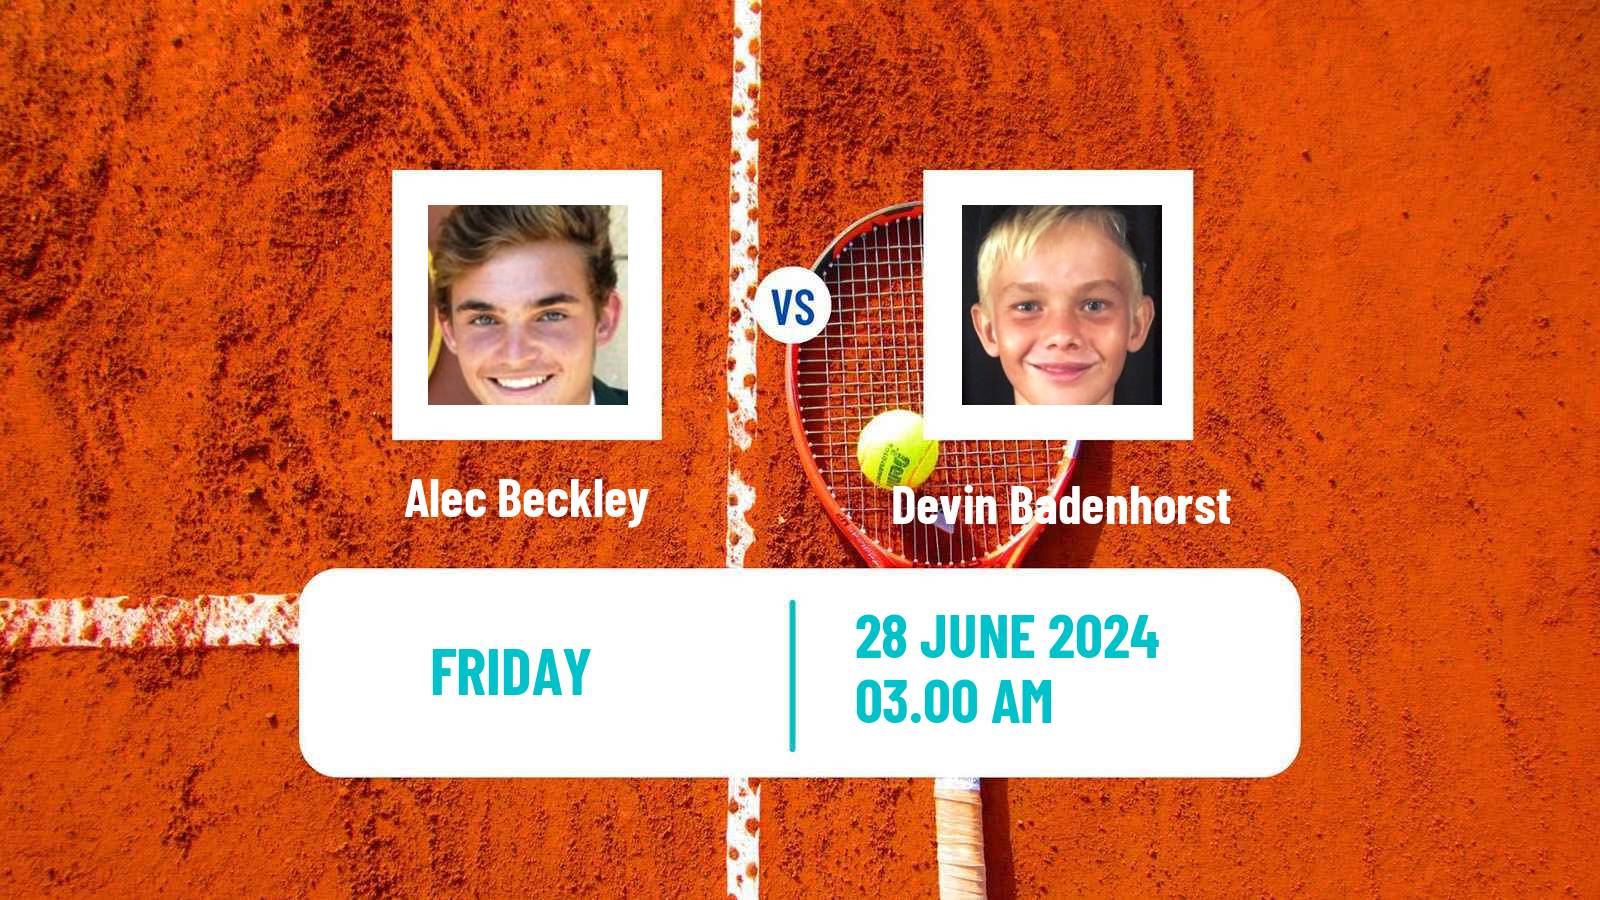 Tennis ITF M25 Hillcrest Men Alec Beckley - Devin Badenhorst